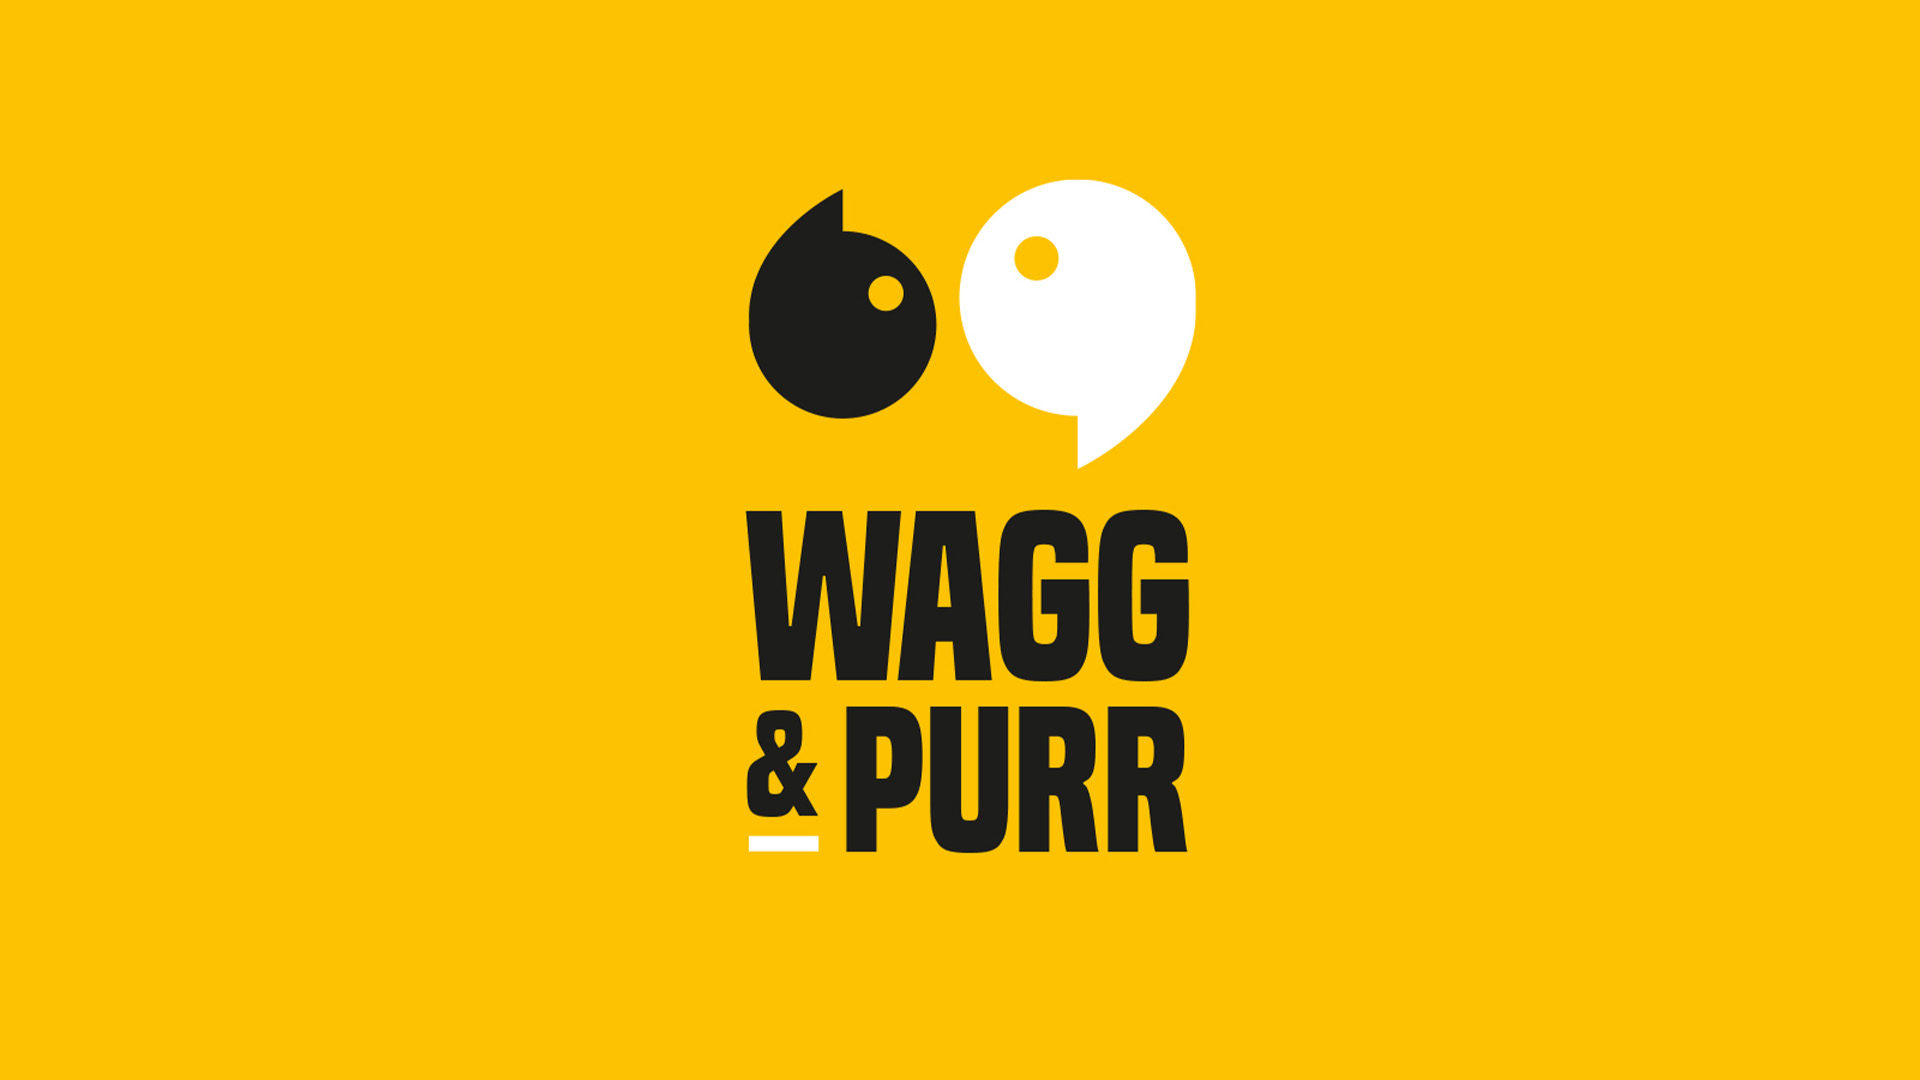 Wagg & Purr logo